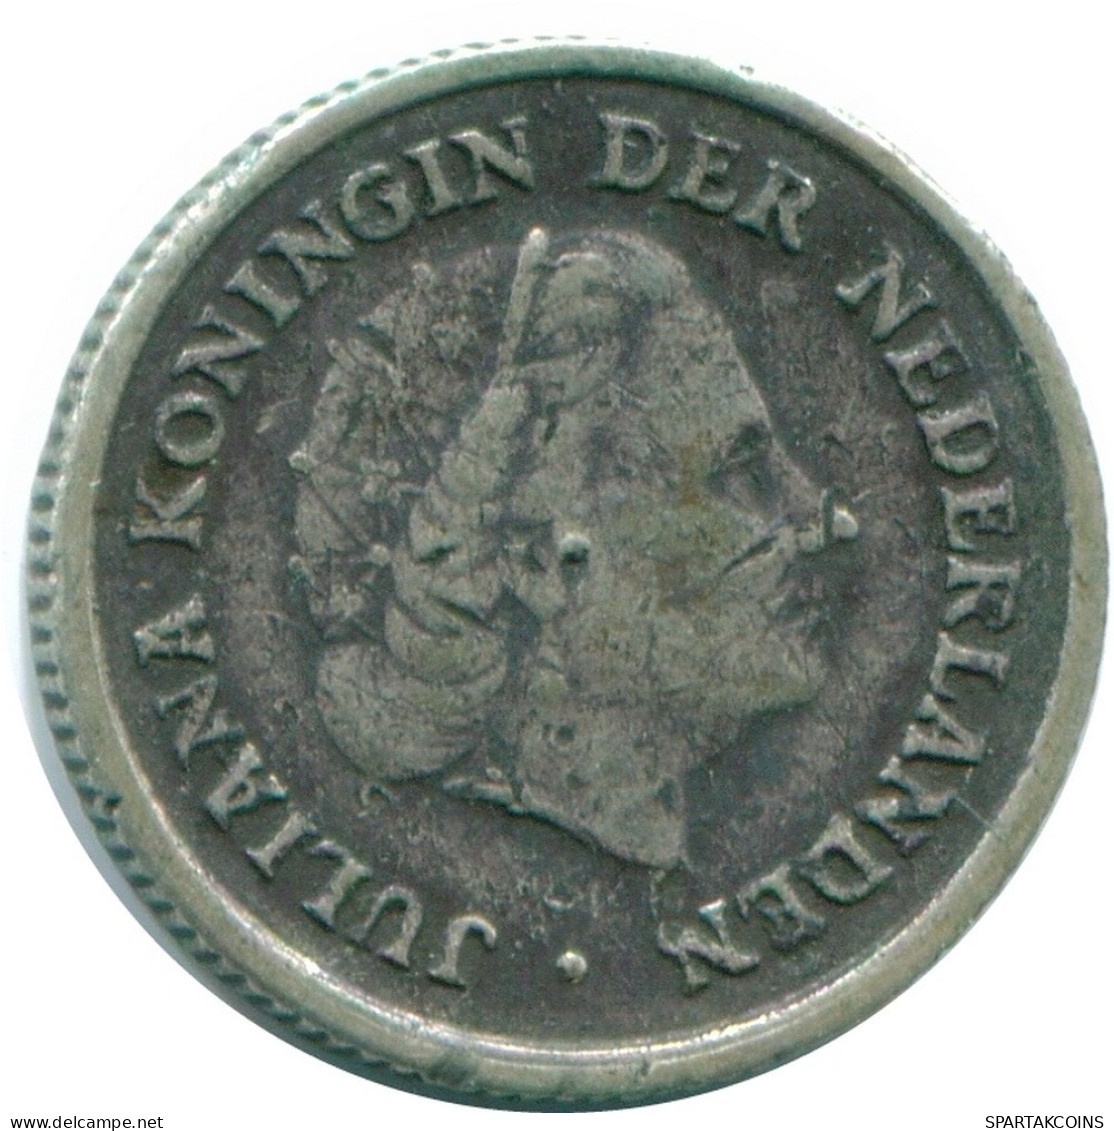 1/10 GULDEN 1956 NETHERLANDS ANTILLES SILVER Colonial Coin #NL12114.3.U.A - Antilles Néerlandaises